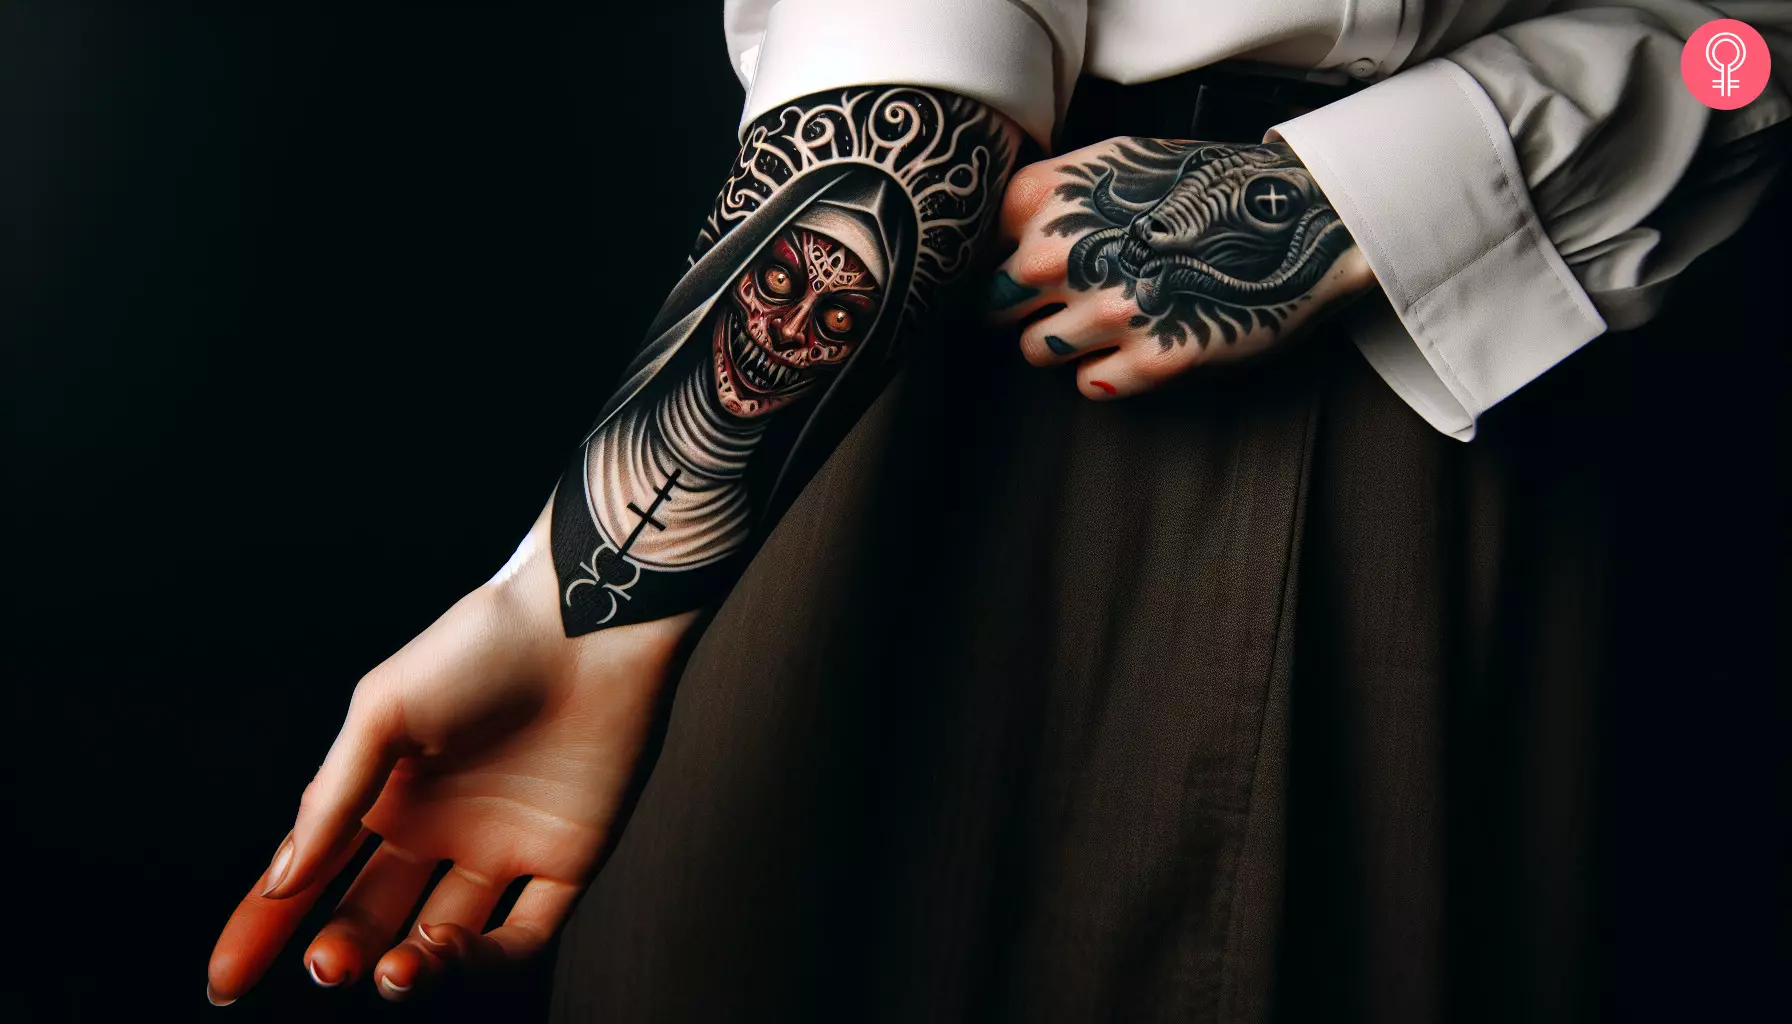 Demon nun tattoo on the forearm